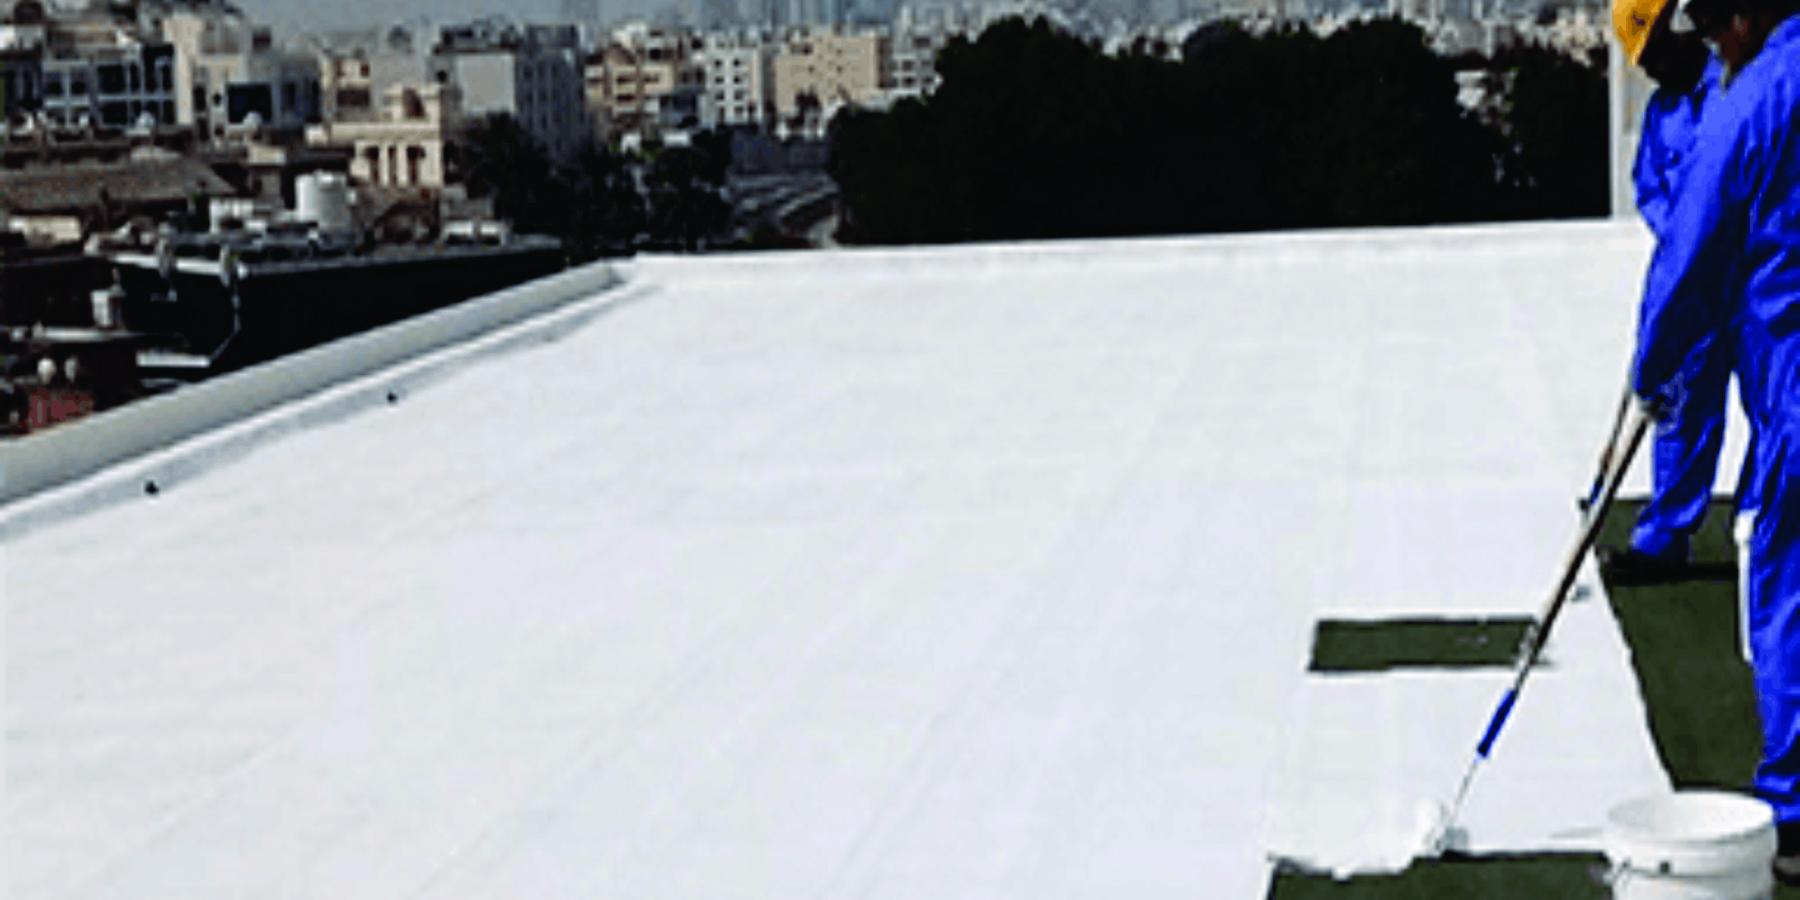 Concrete roof terrace heat proofed with Australian